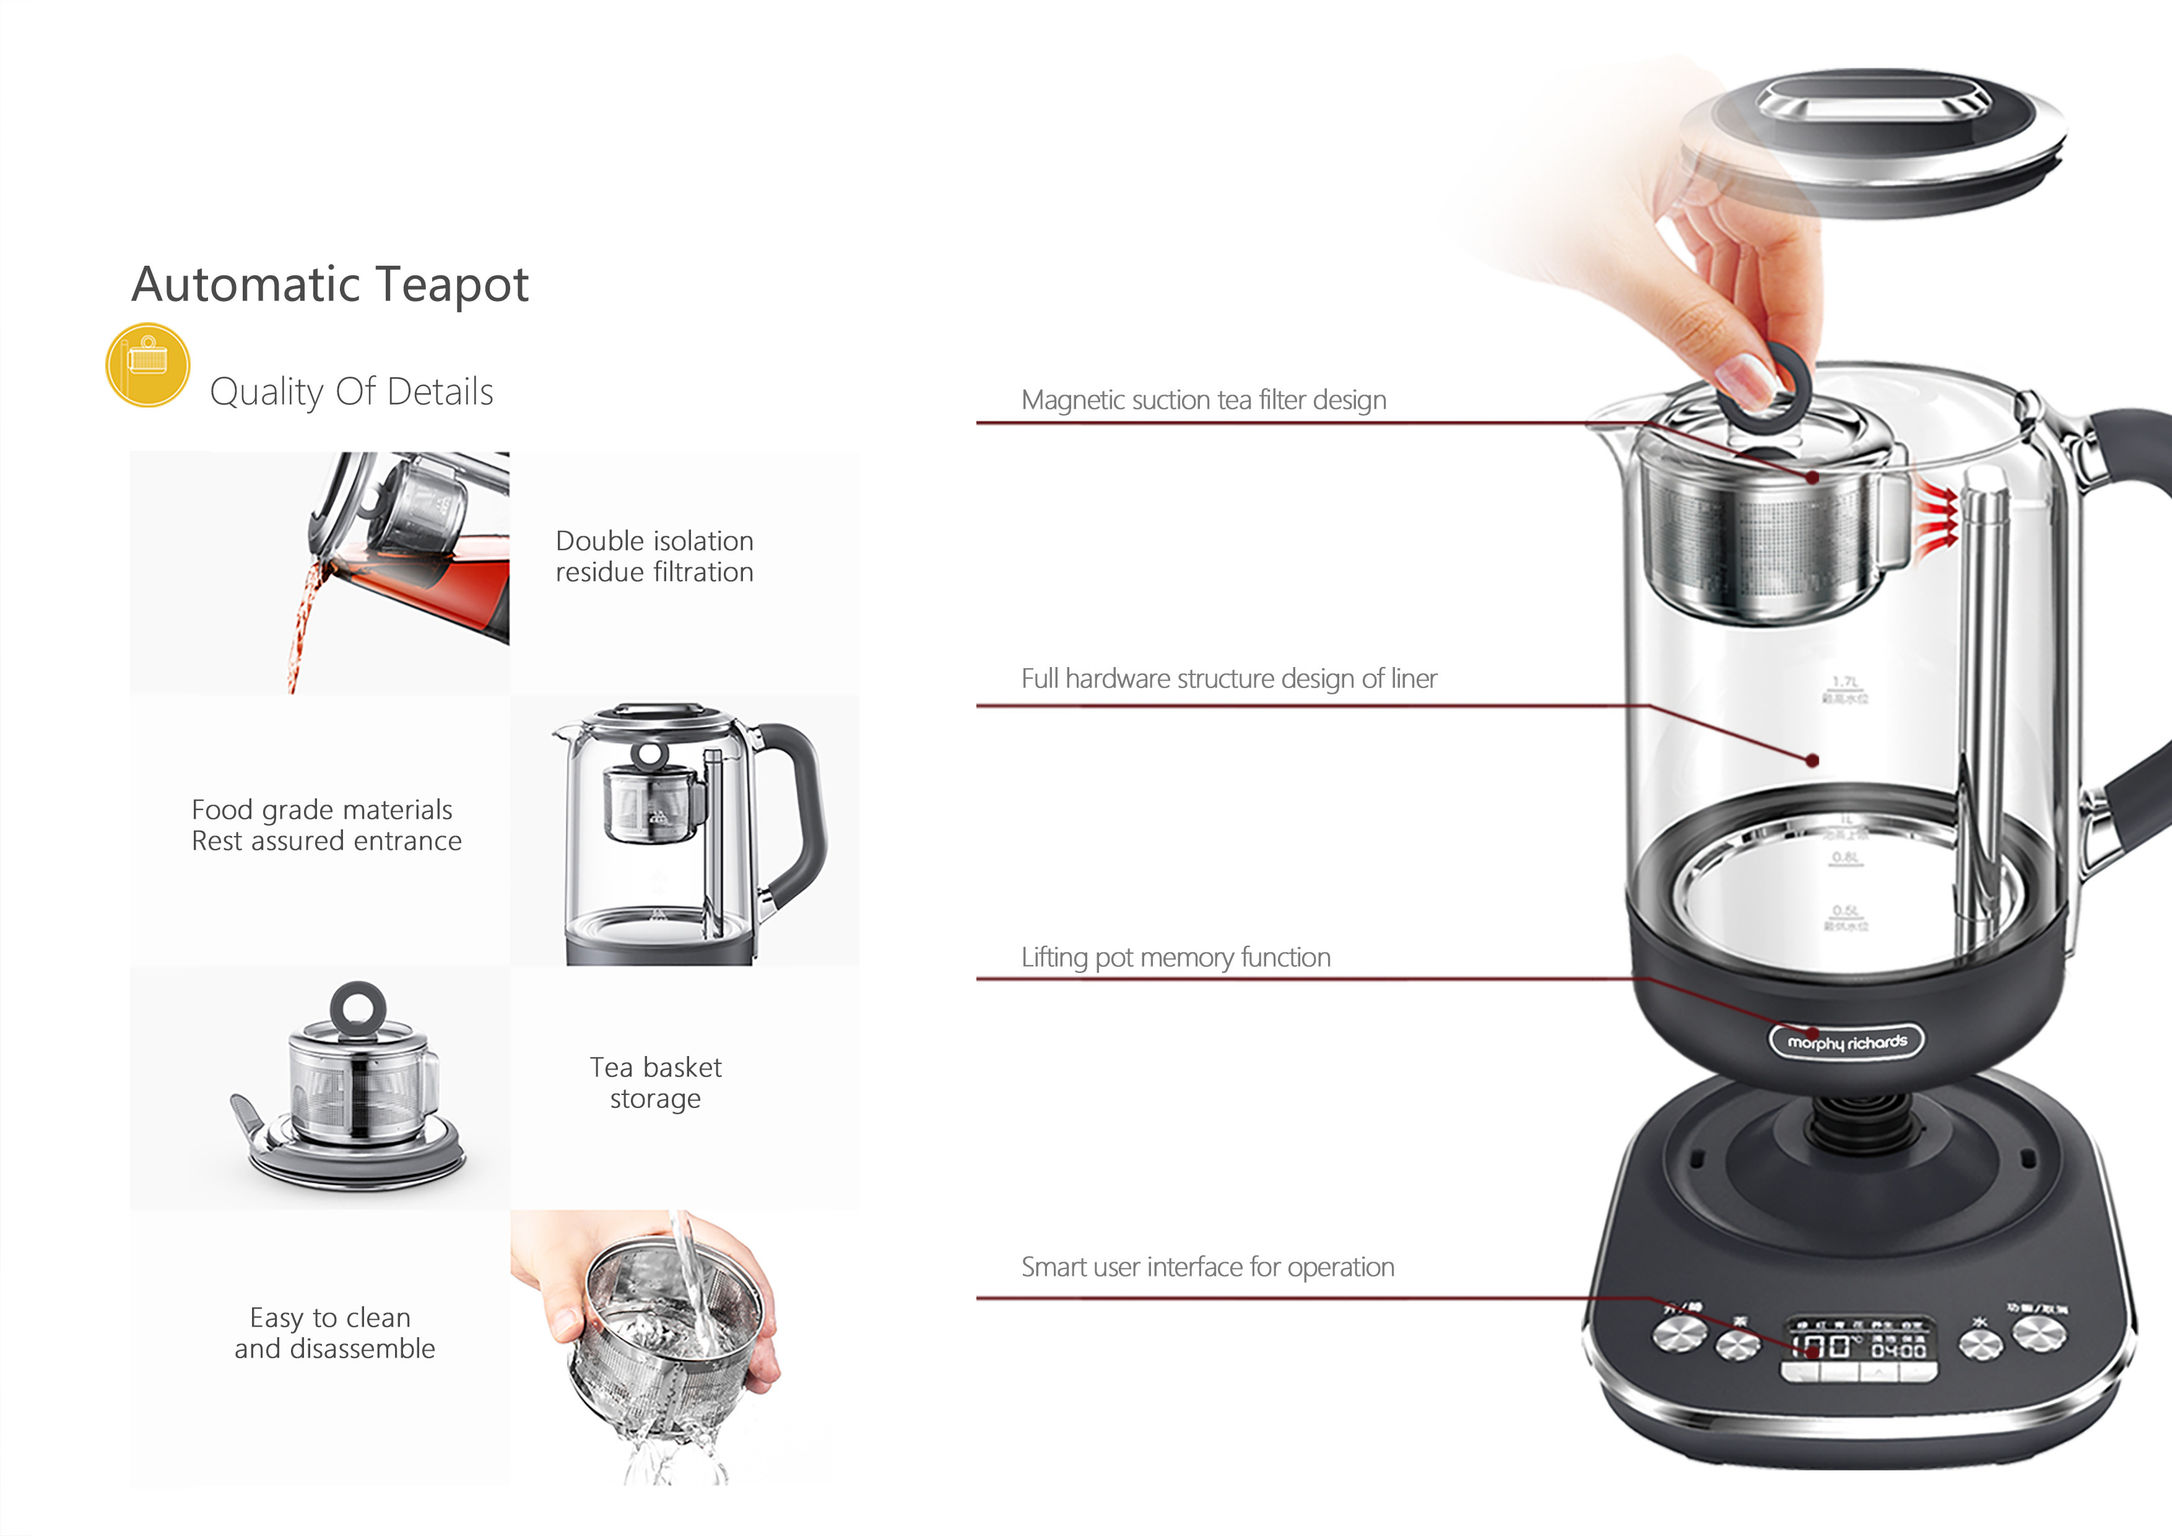 Automatic Teapot